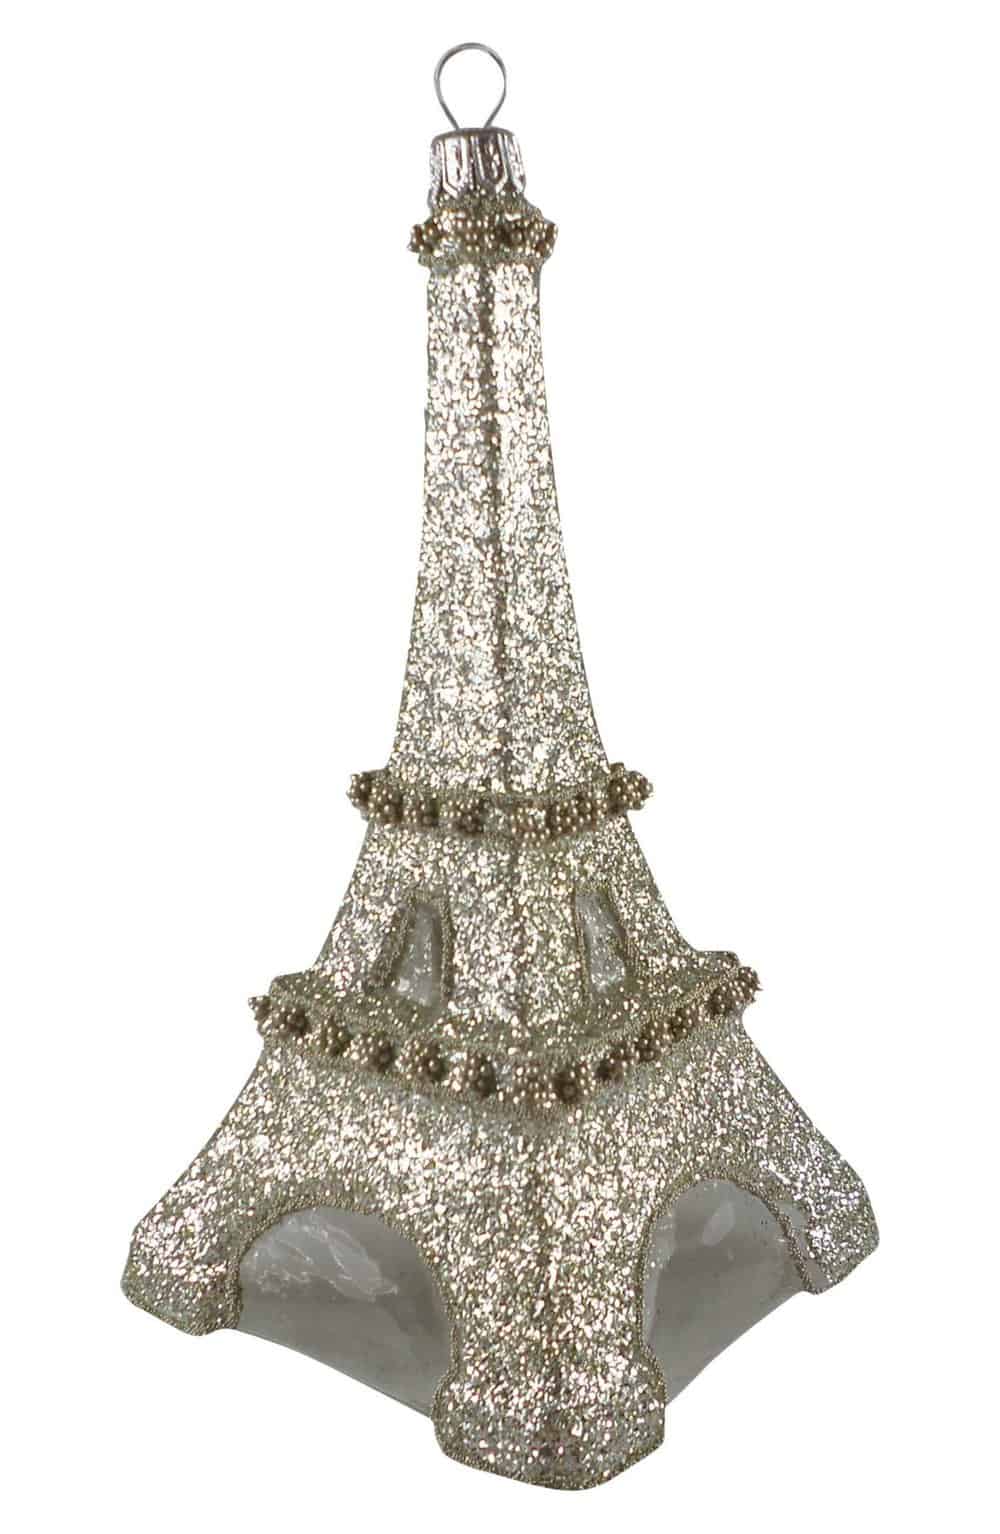 Eiffel Tower Ornament Nordstrom $26.50